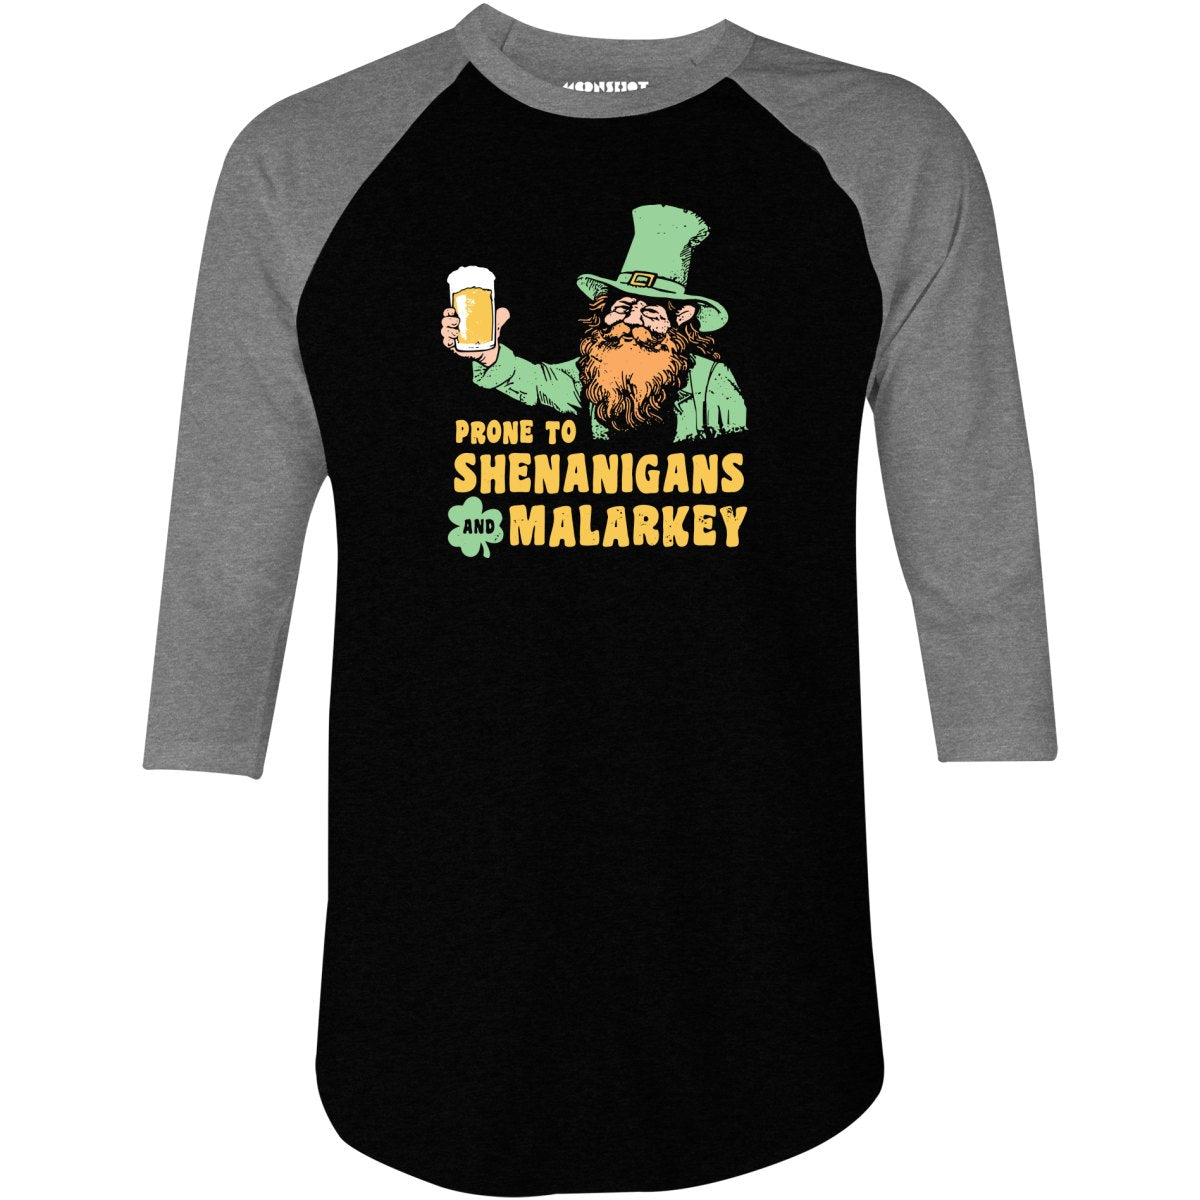 Prone to Shenanigans and Malarkey - 3/4 Sleeve Raglan T-Shirt